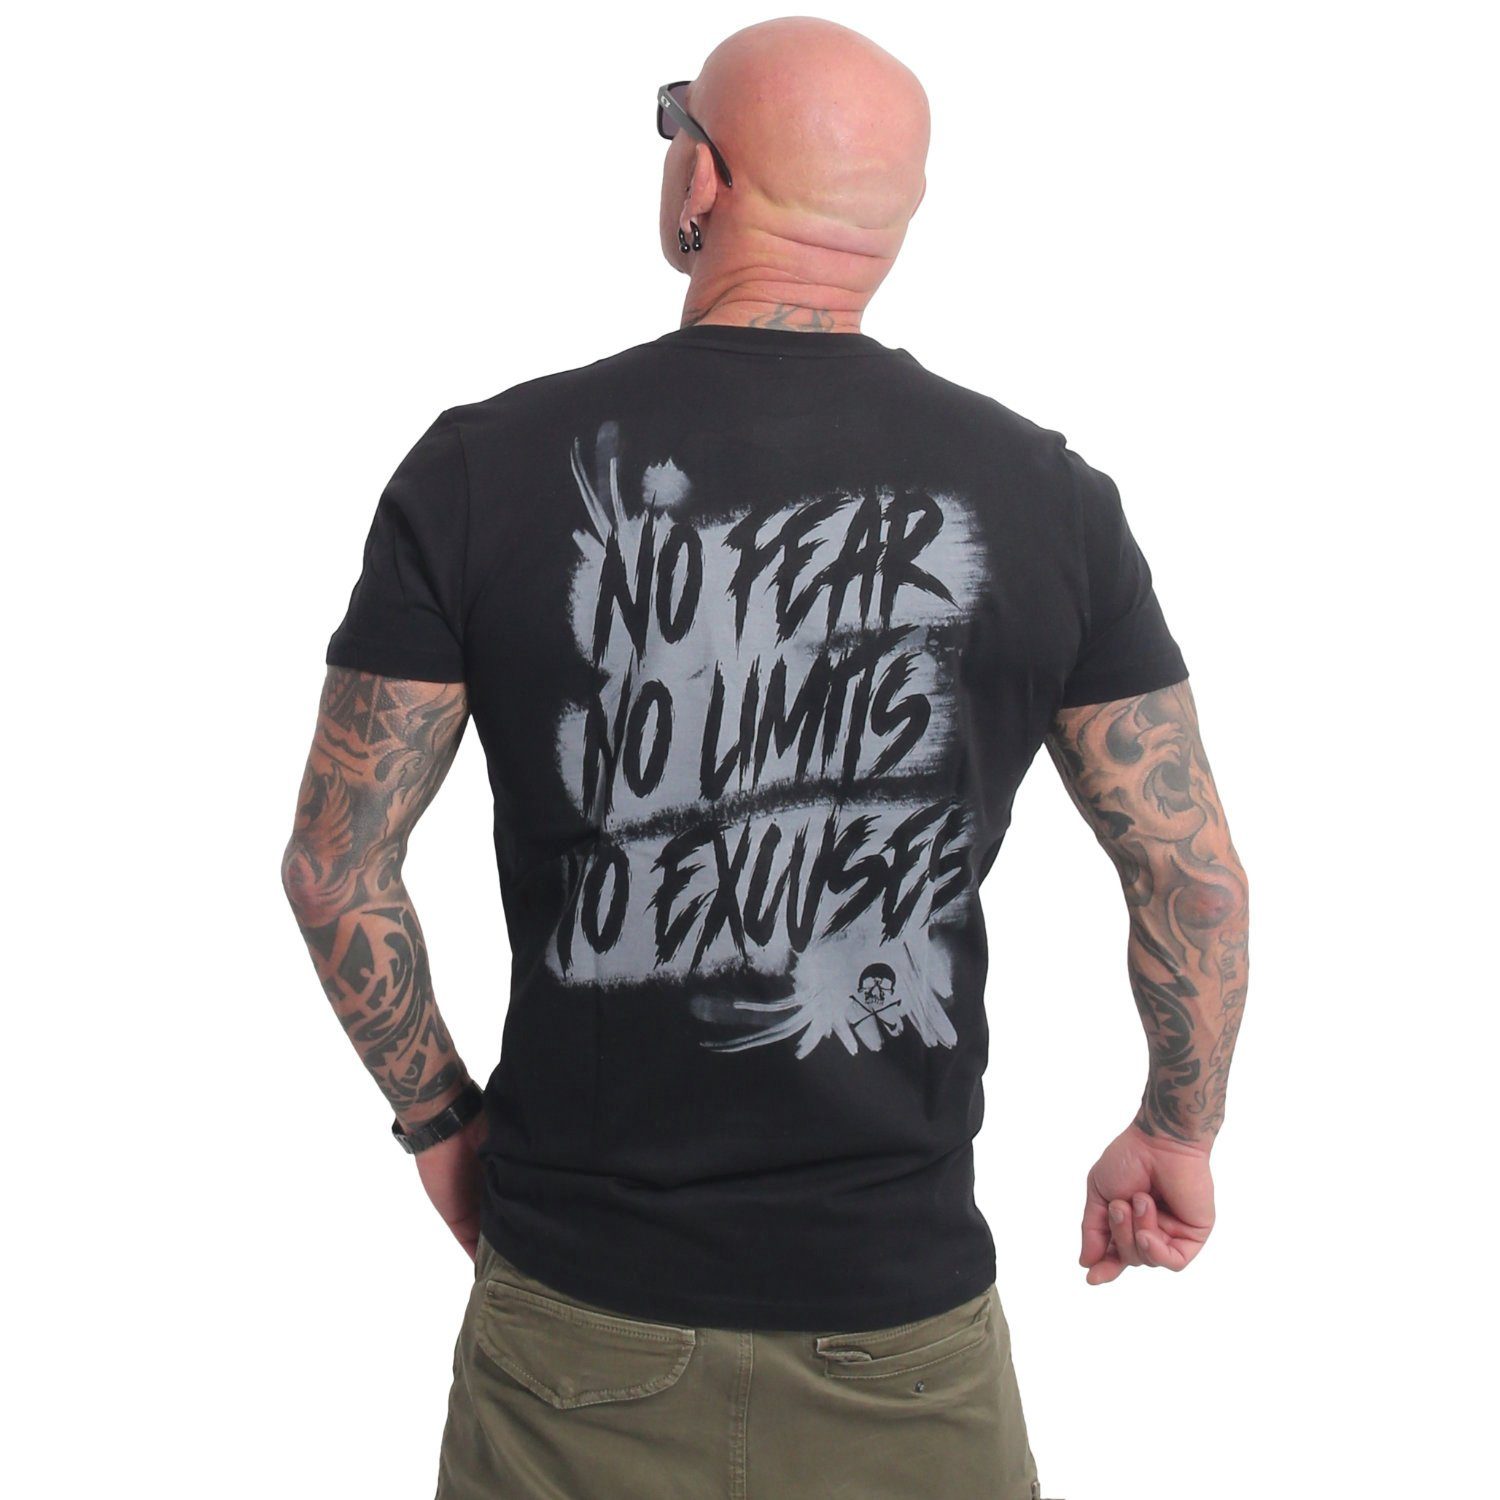 YAKUZA T-Shirt No schwarz Limits